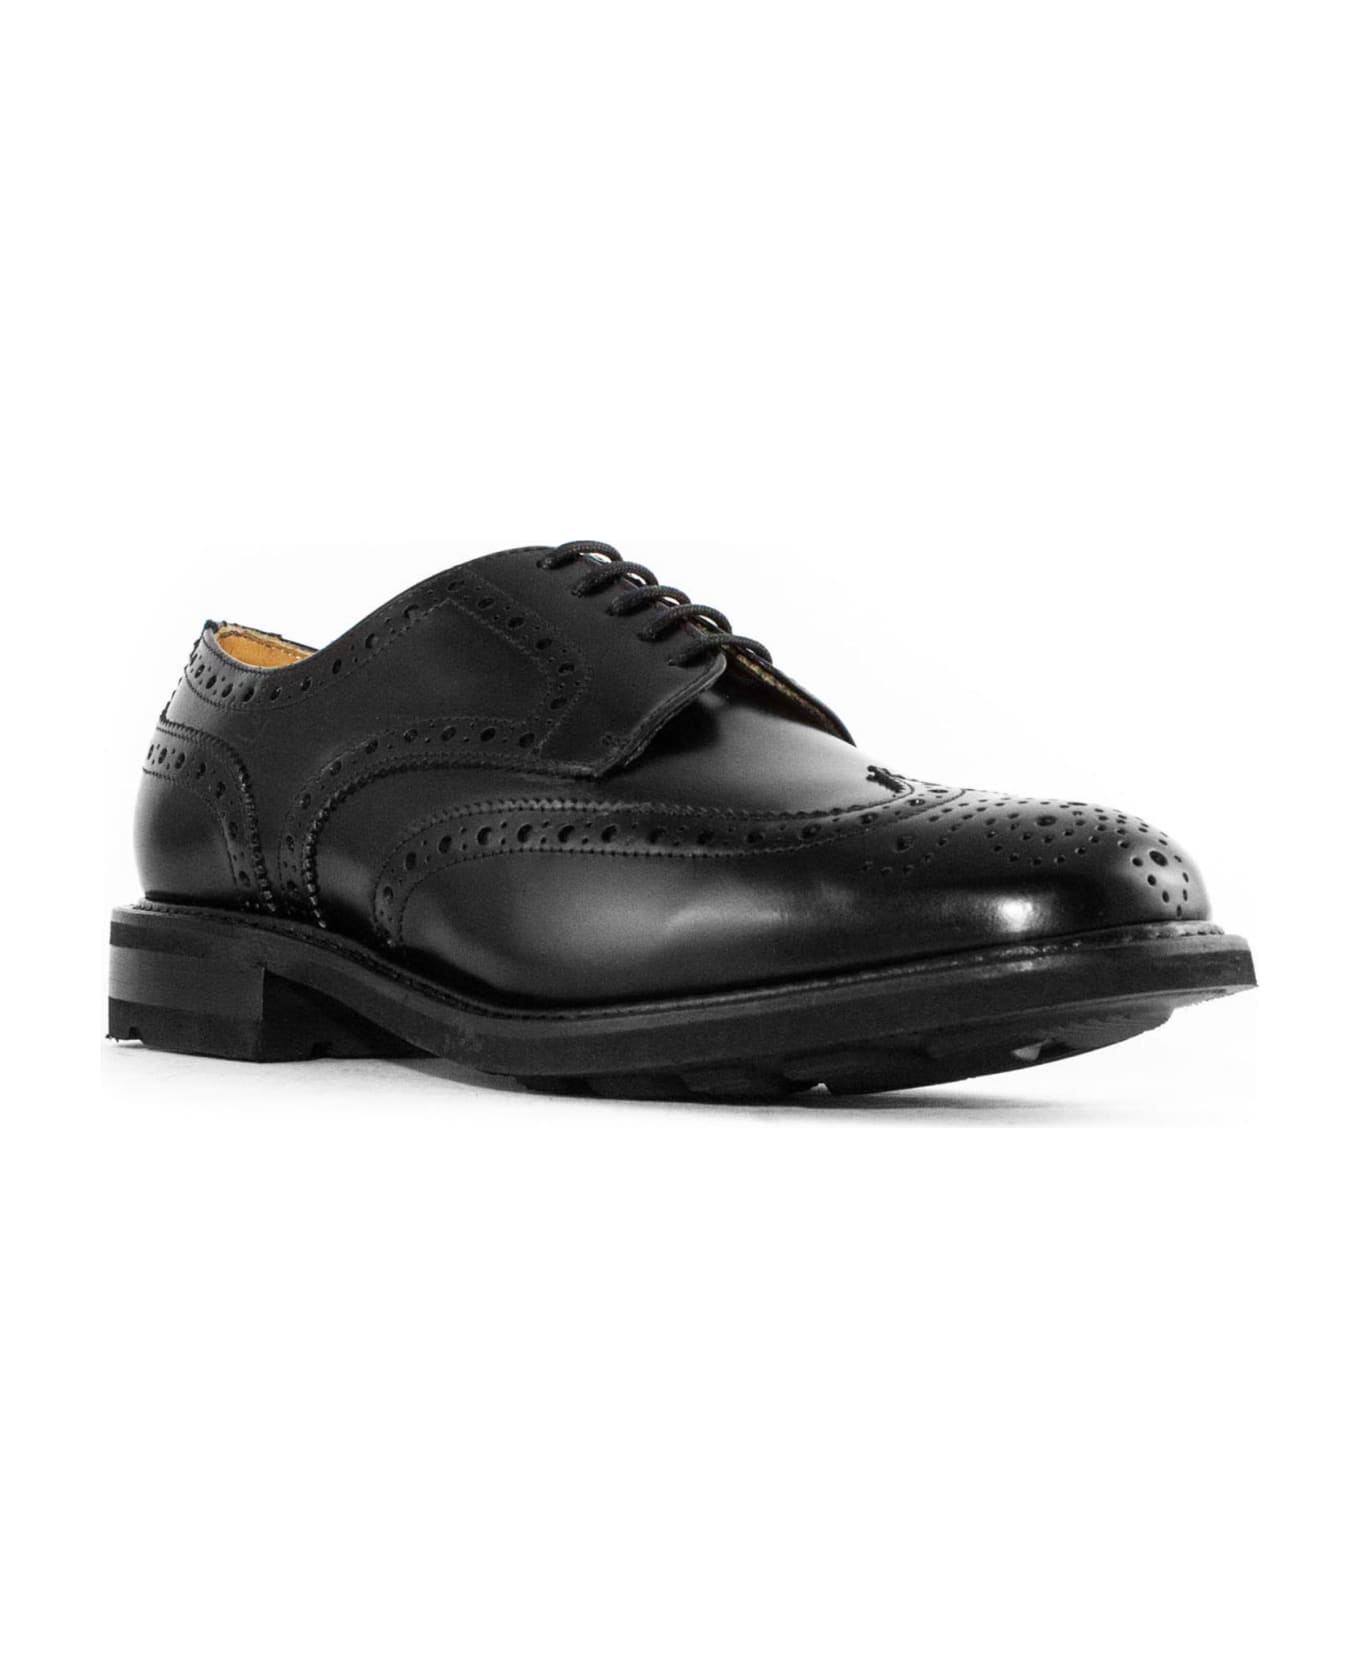 Berwick 1707 Black Shiny Leather Derby Shoes - Black